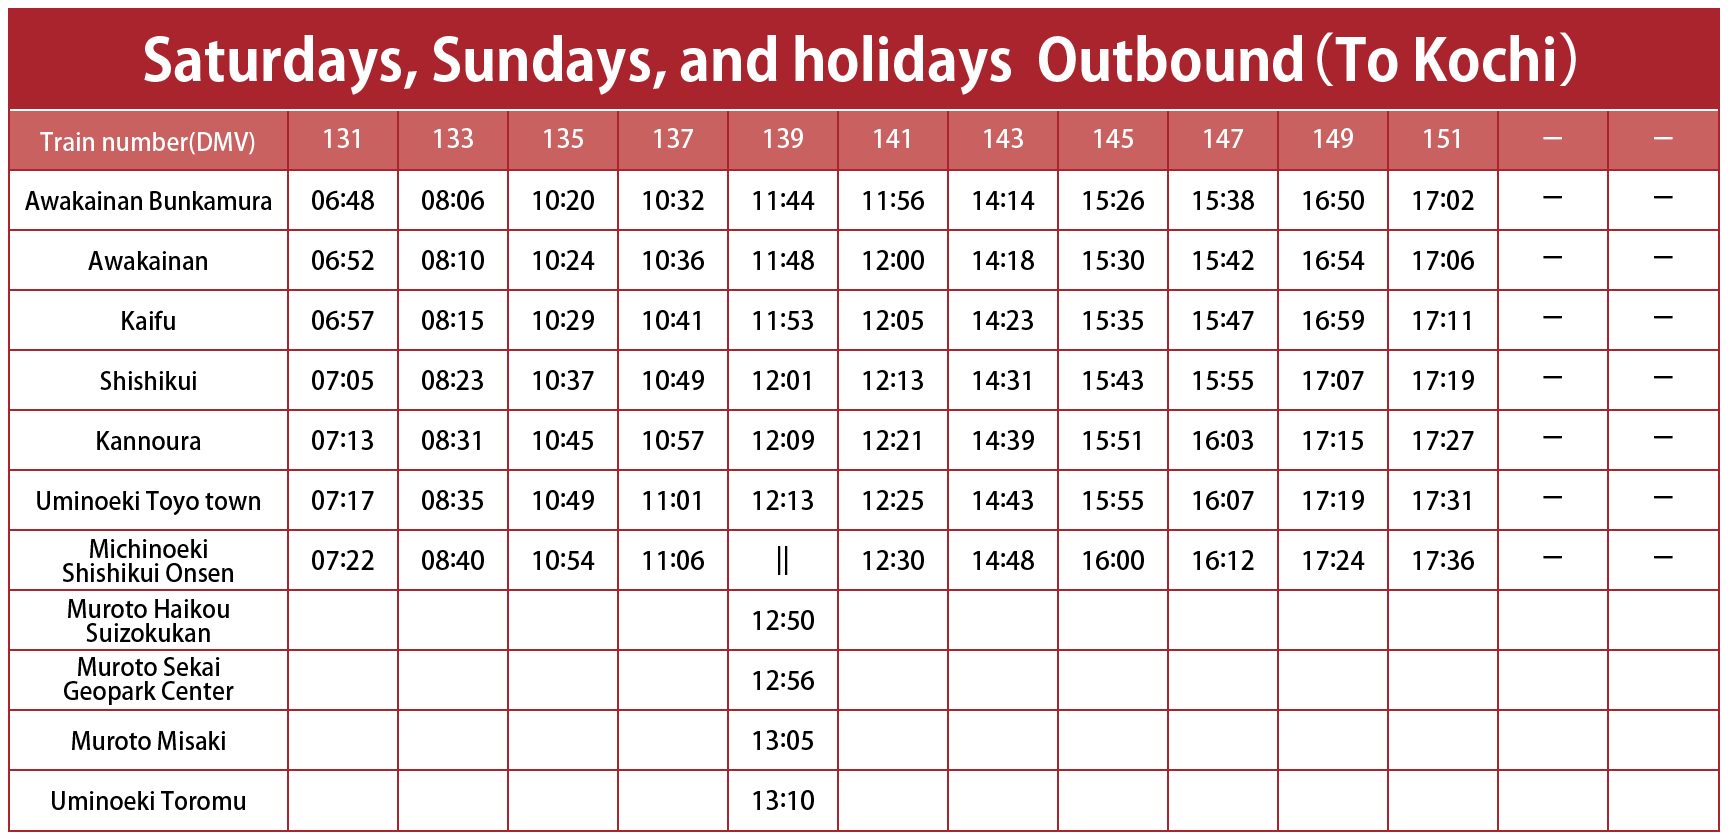 Timetable Saturdays, Sundays, and holidays Outbound (To Kochi)